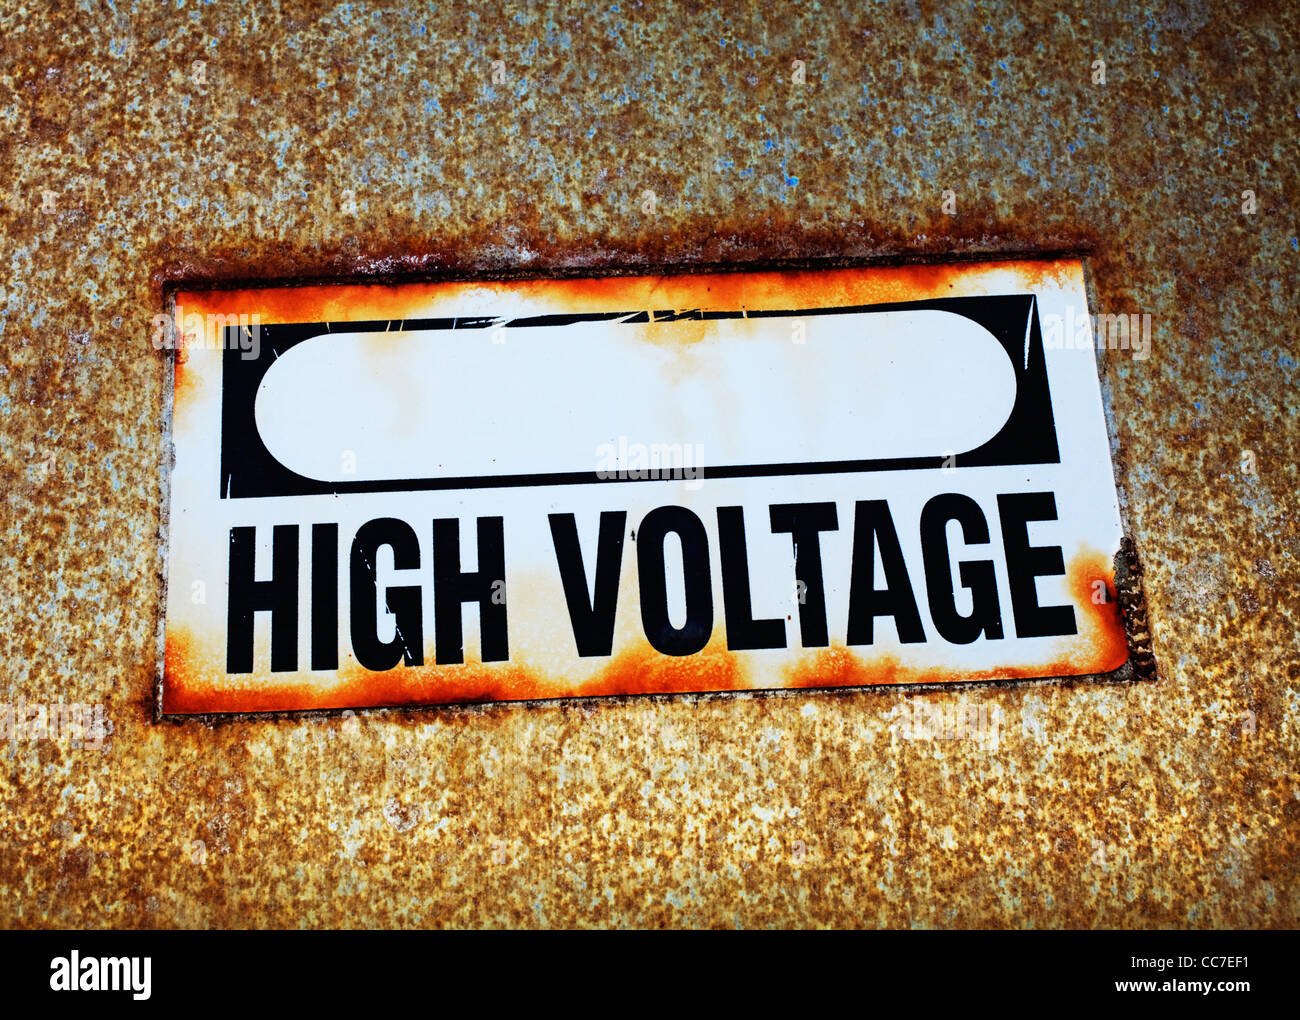 Vintage Warning Sign "High Voltage" Made in Poland Industrial Signage 